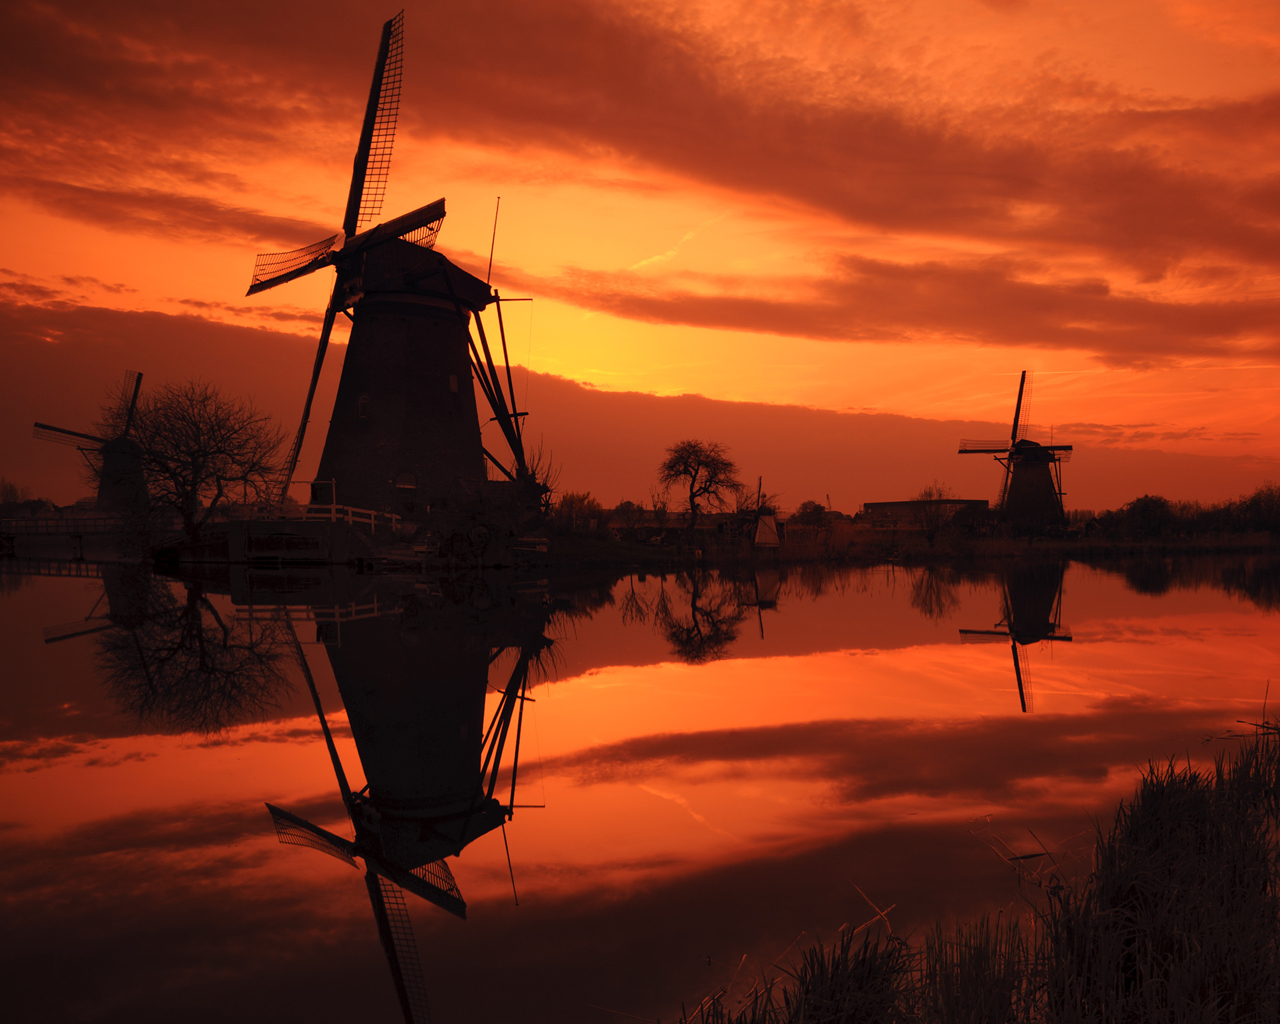 Windmills at Sunset